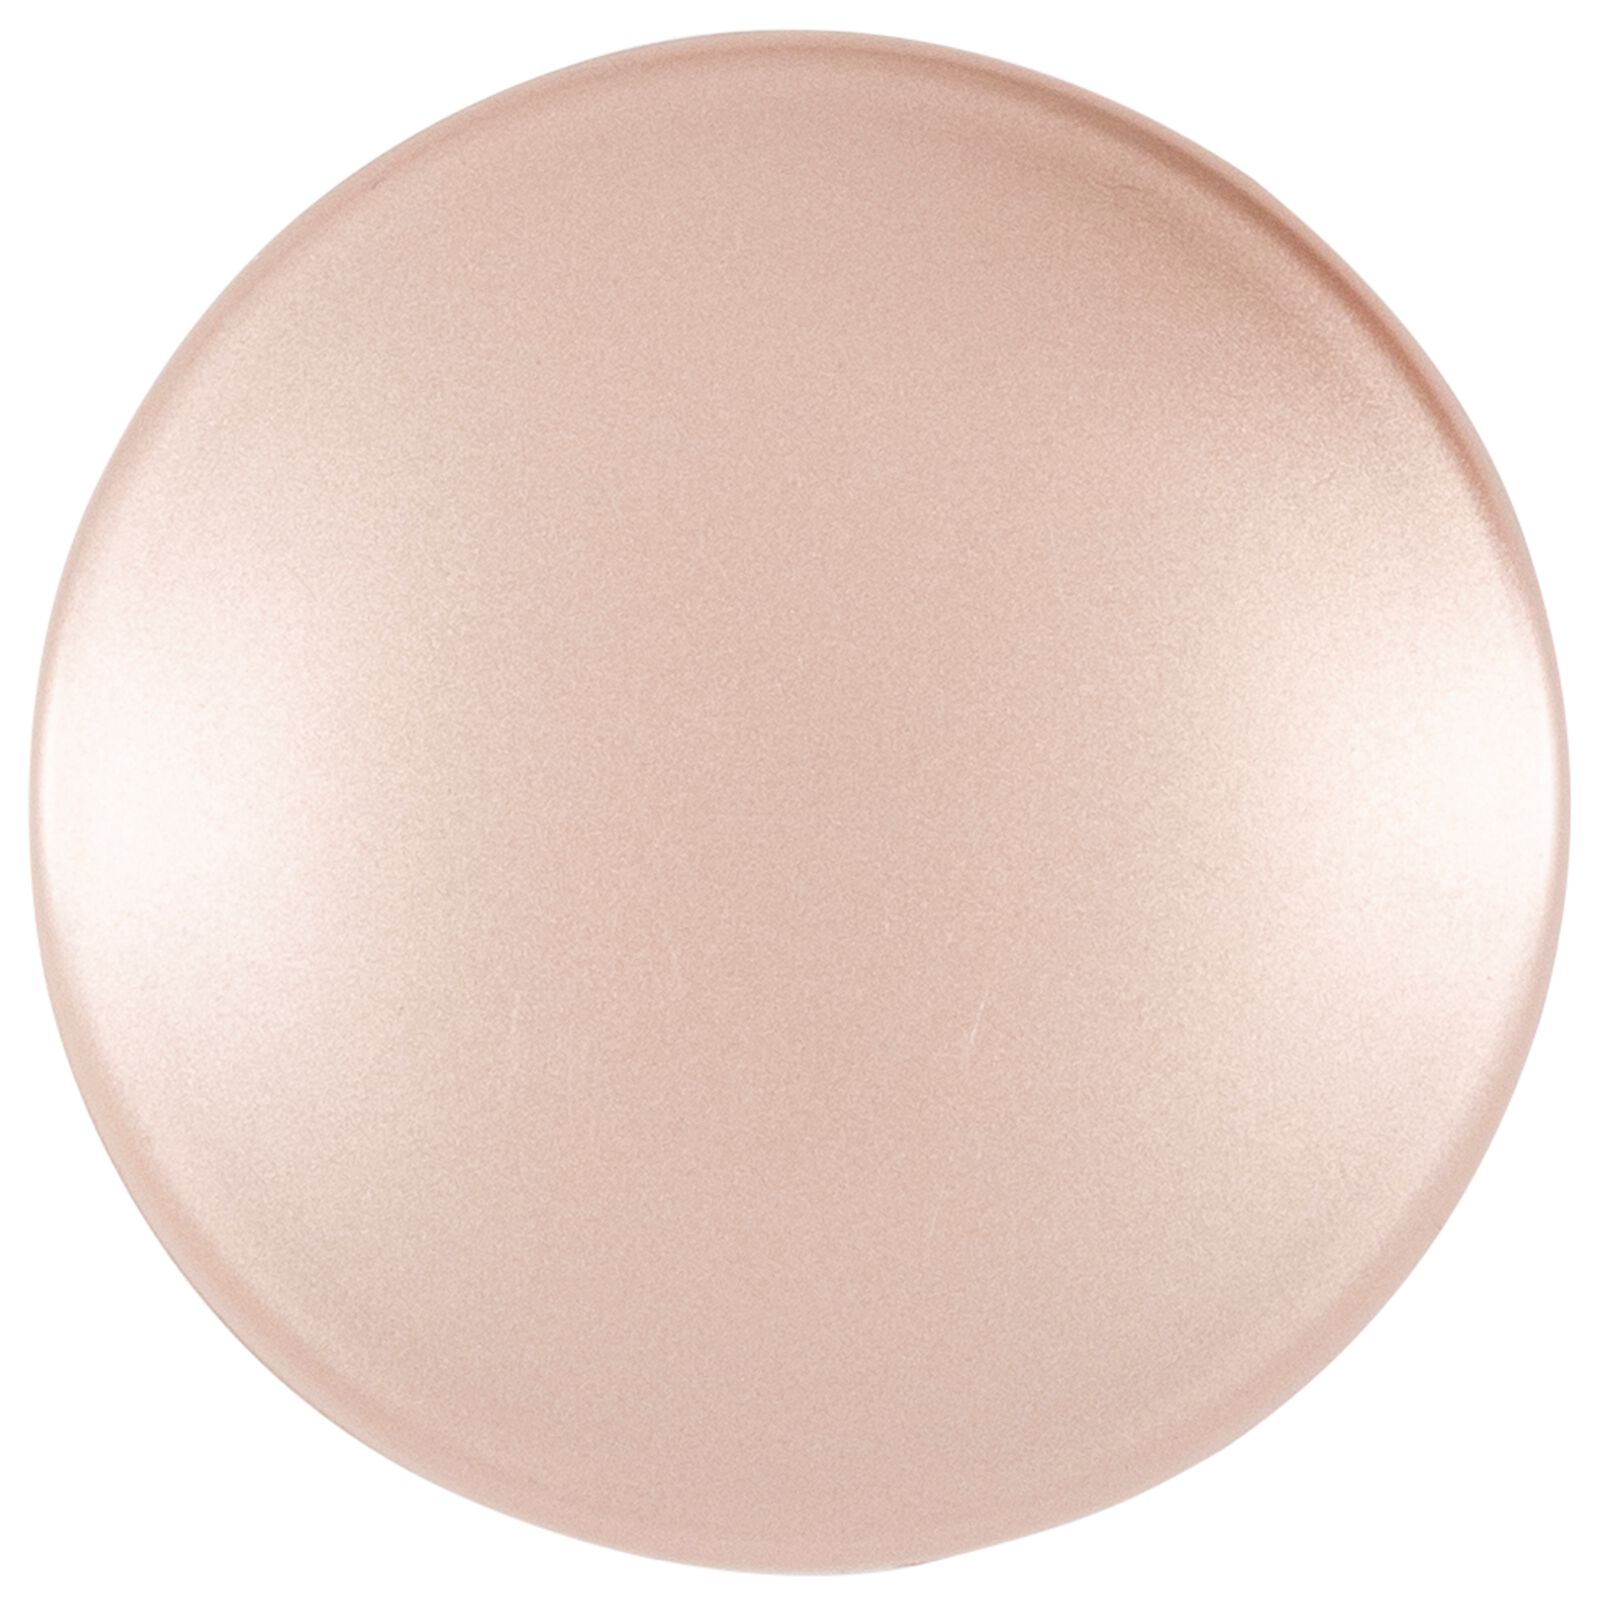 vouwspiegeltje metallic rosé Ø 7.5 cm - 11821050 - HEMA